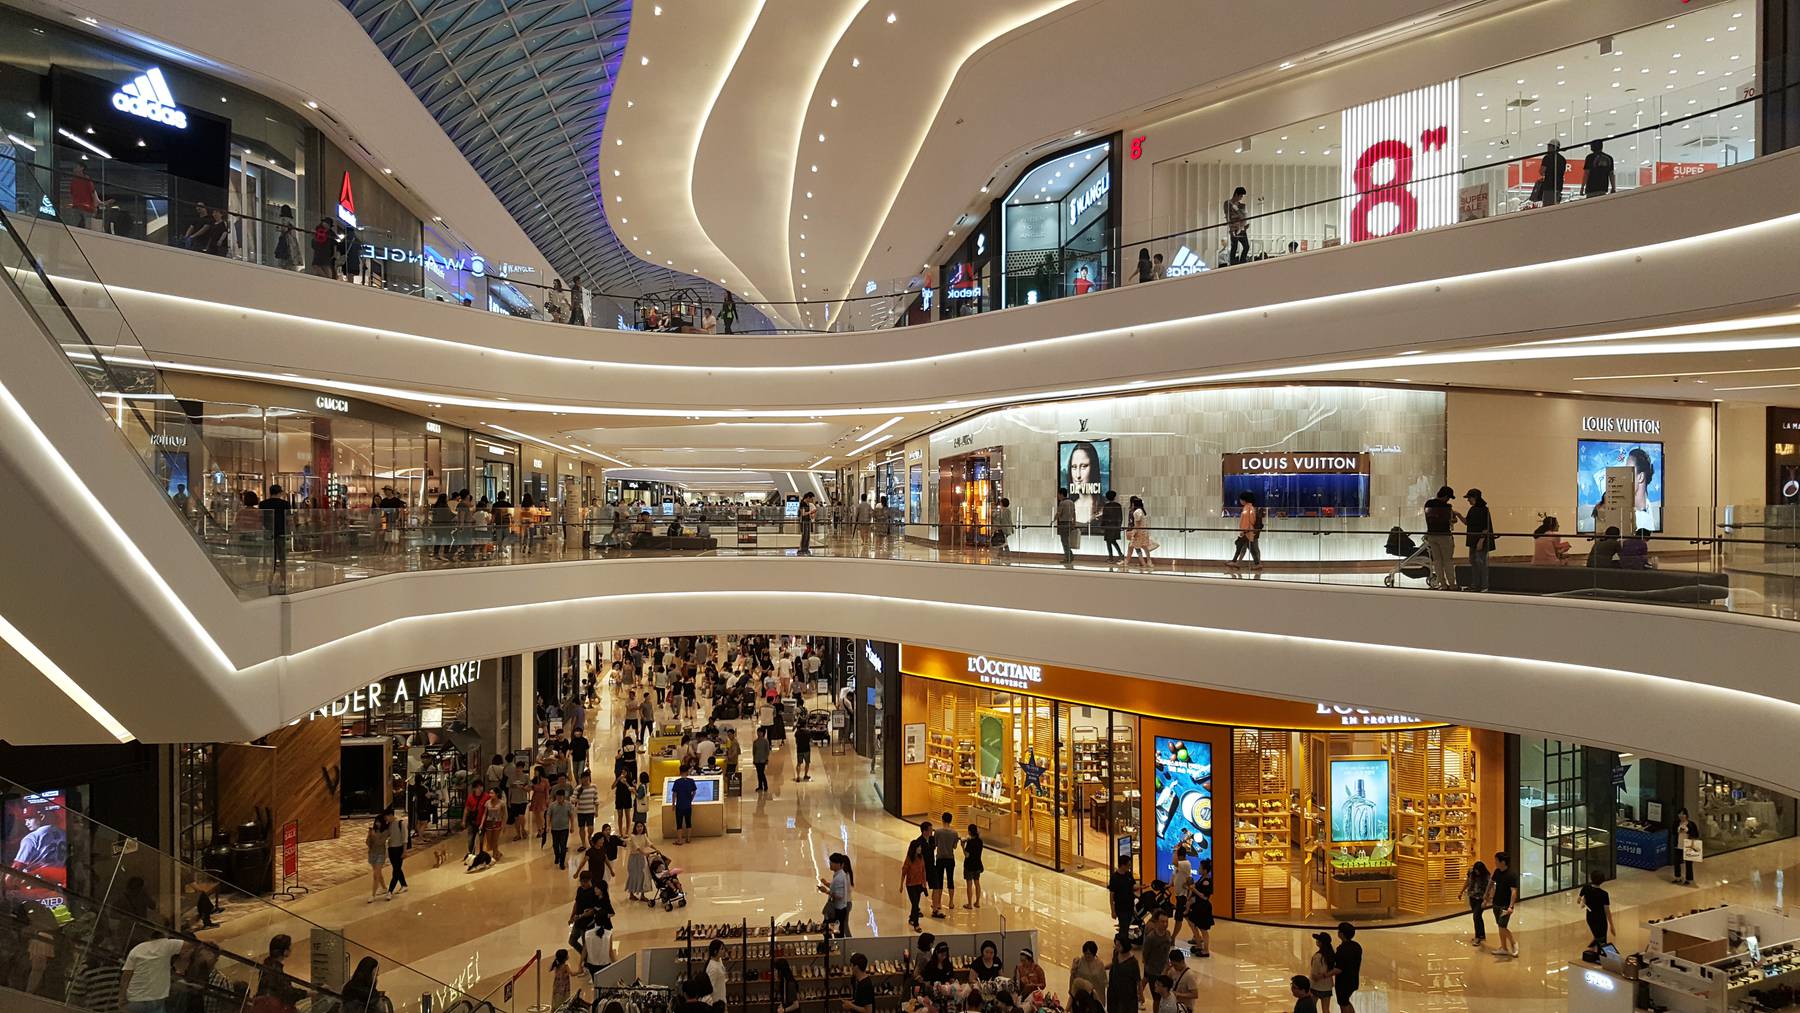 Inside Starfield, Hanam, one of the biggest malls in South Korea. Shutterstock.